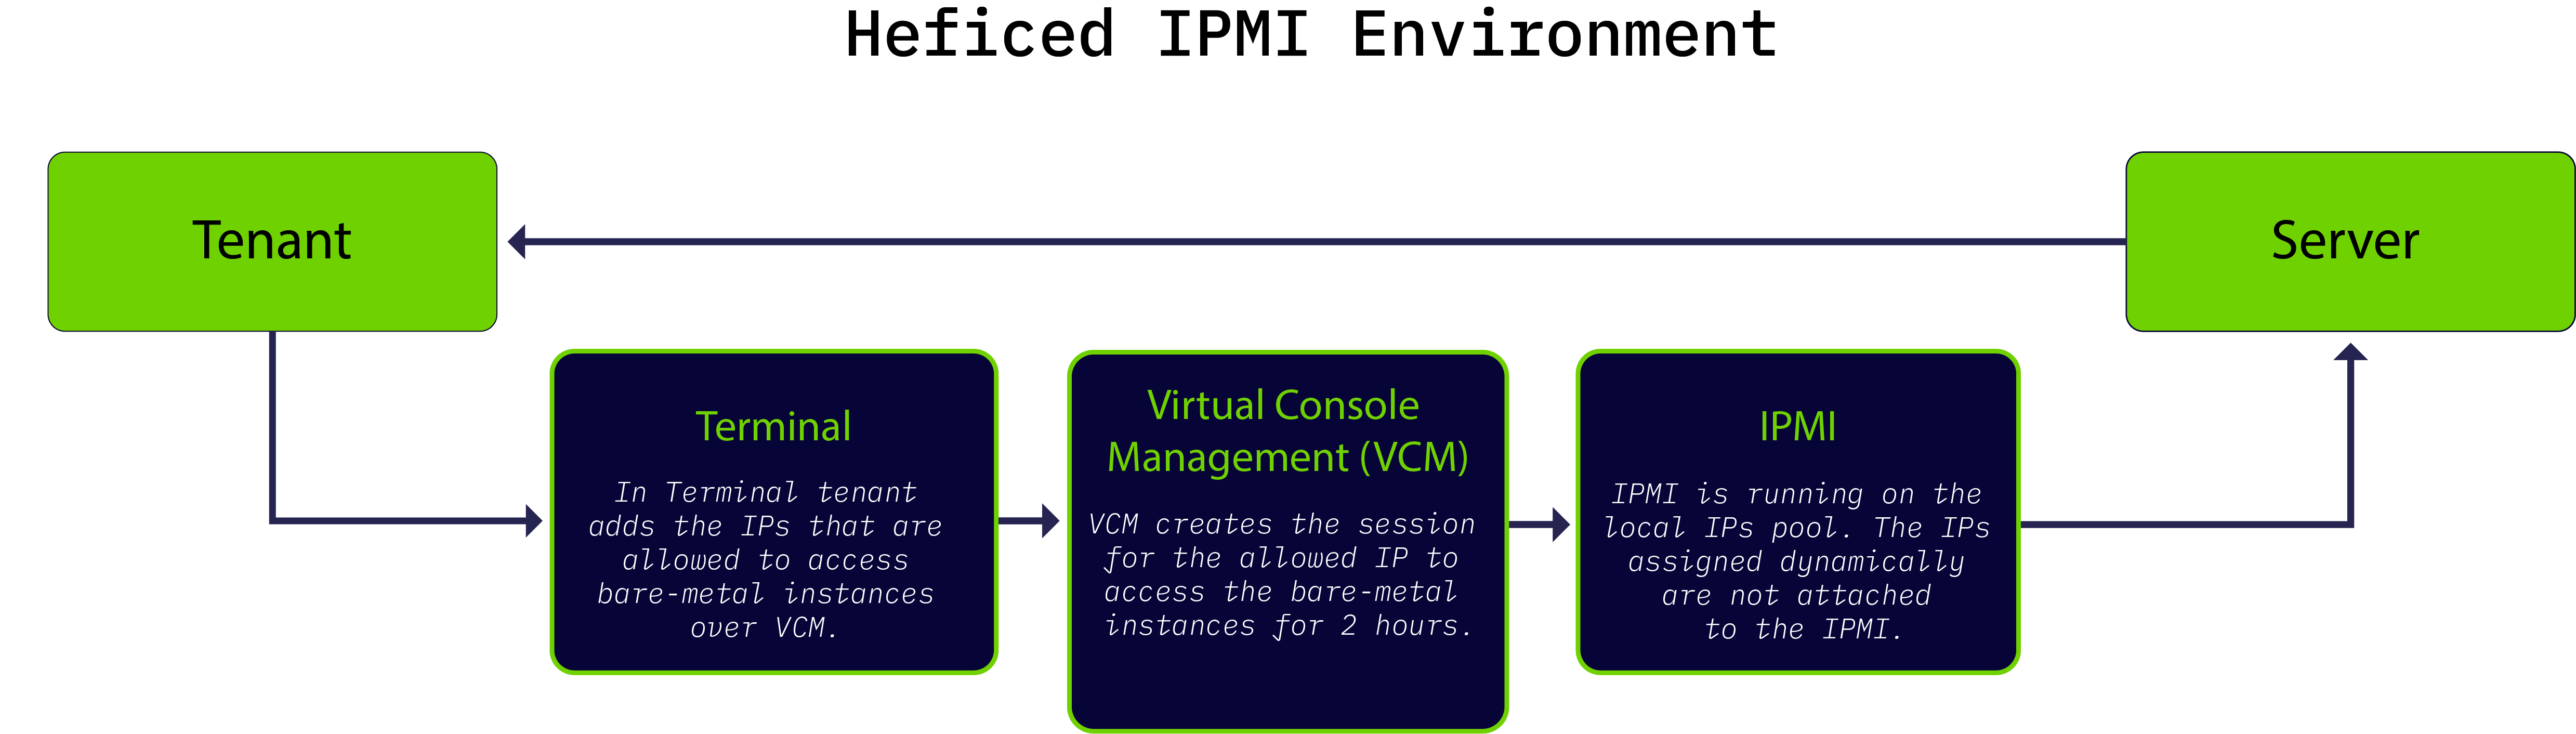 Heficed IPMI Environment (Virtual Console)